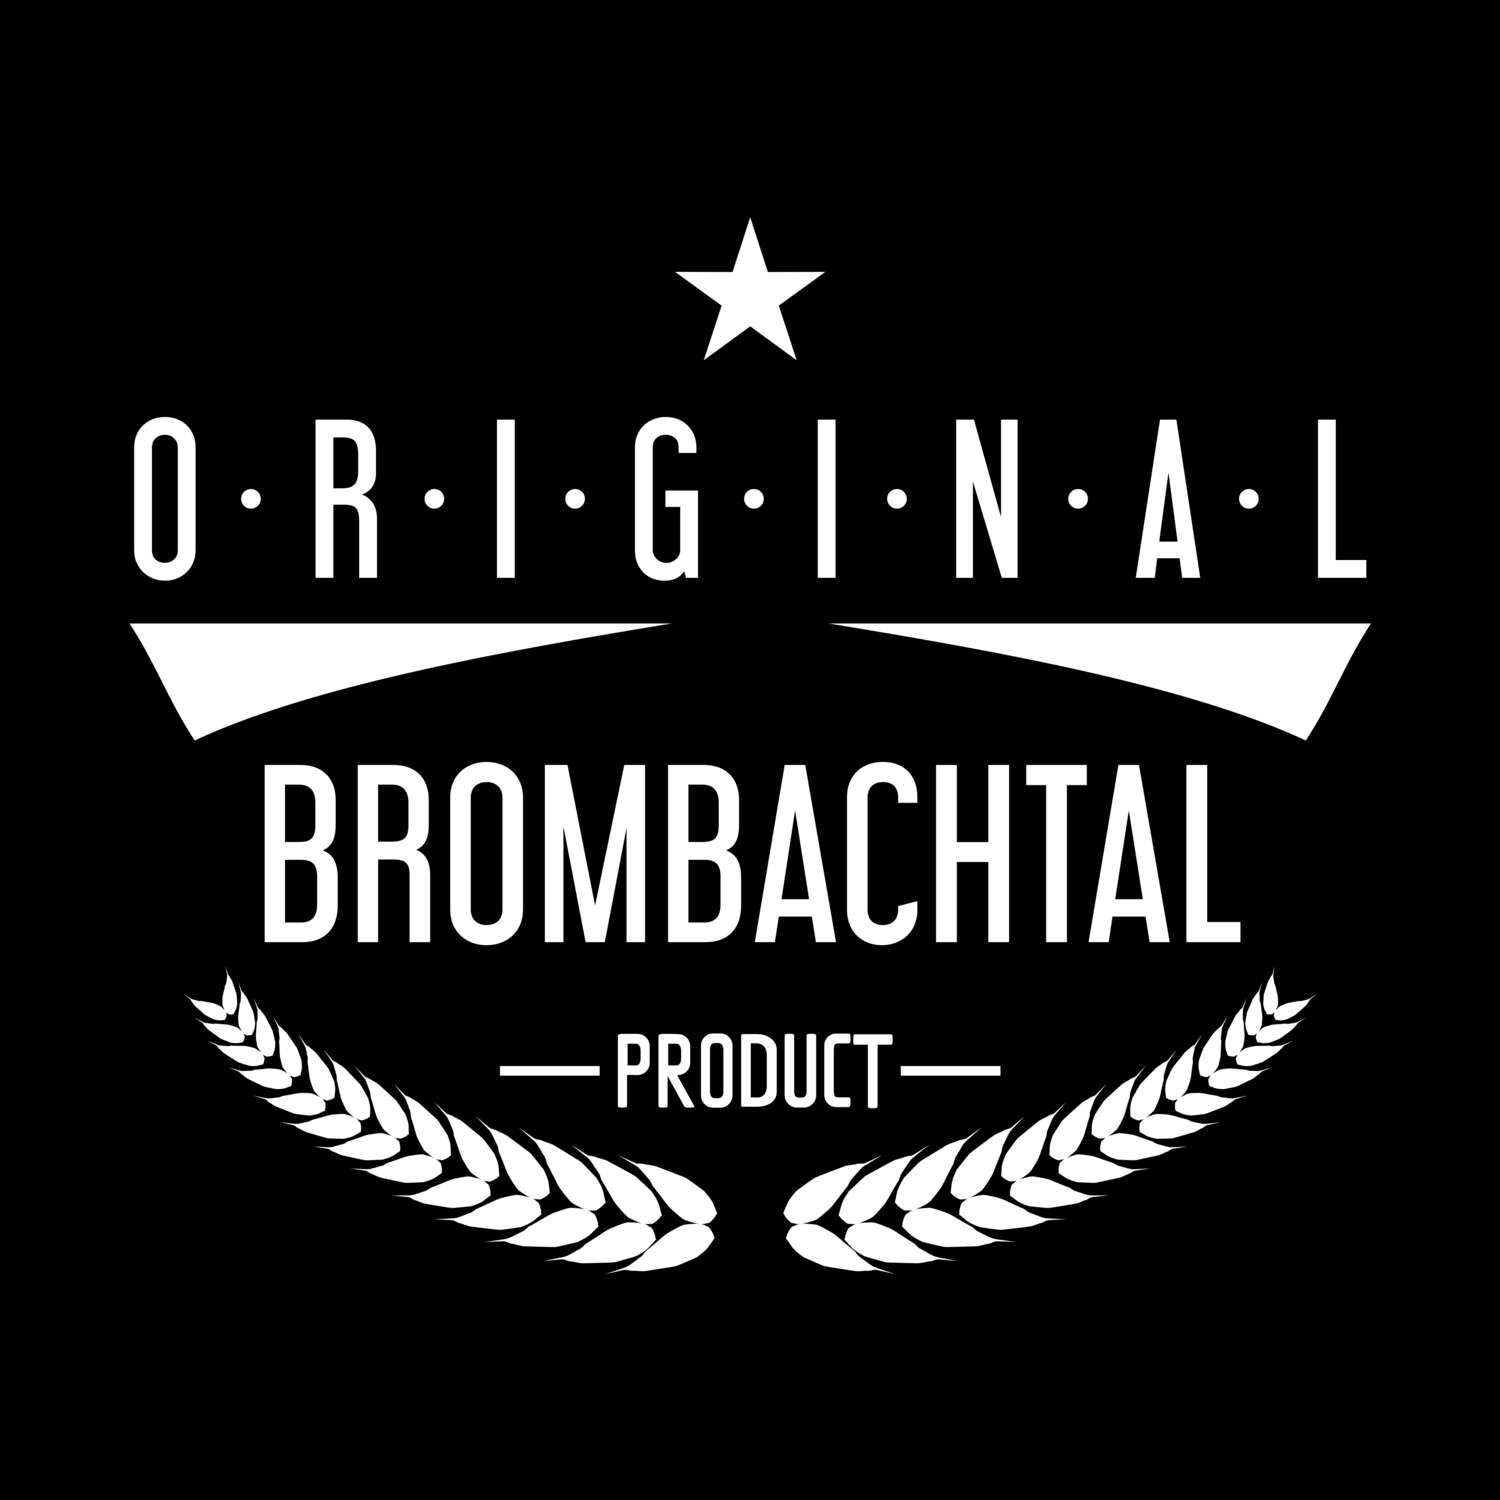 Brombachtal T-Shirt »Original Product«